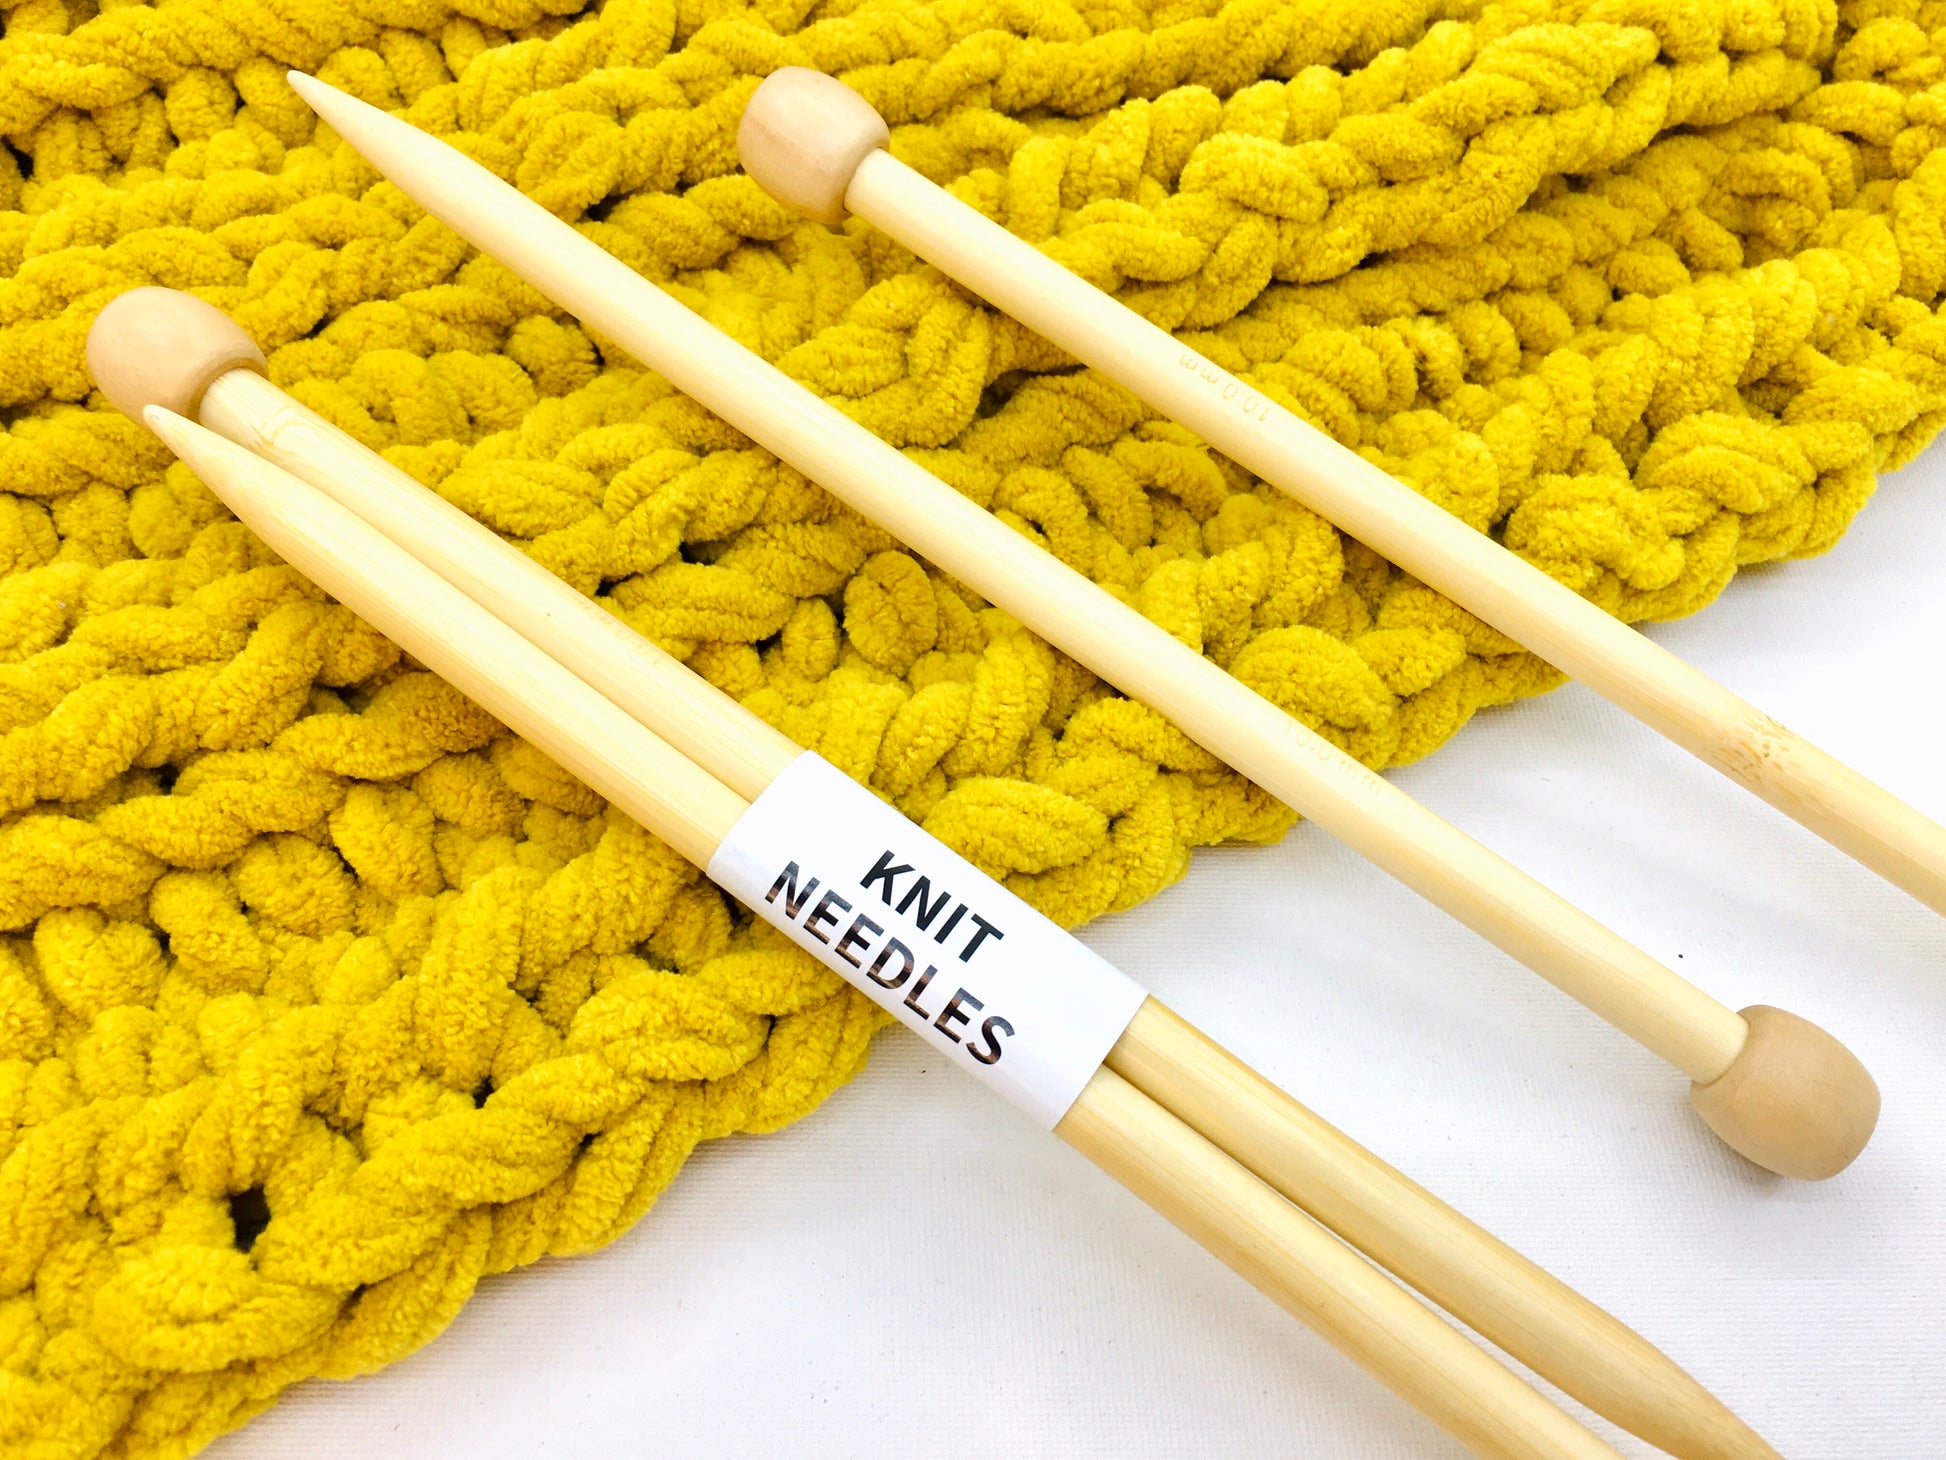 10mm short knitting needles